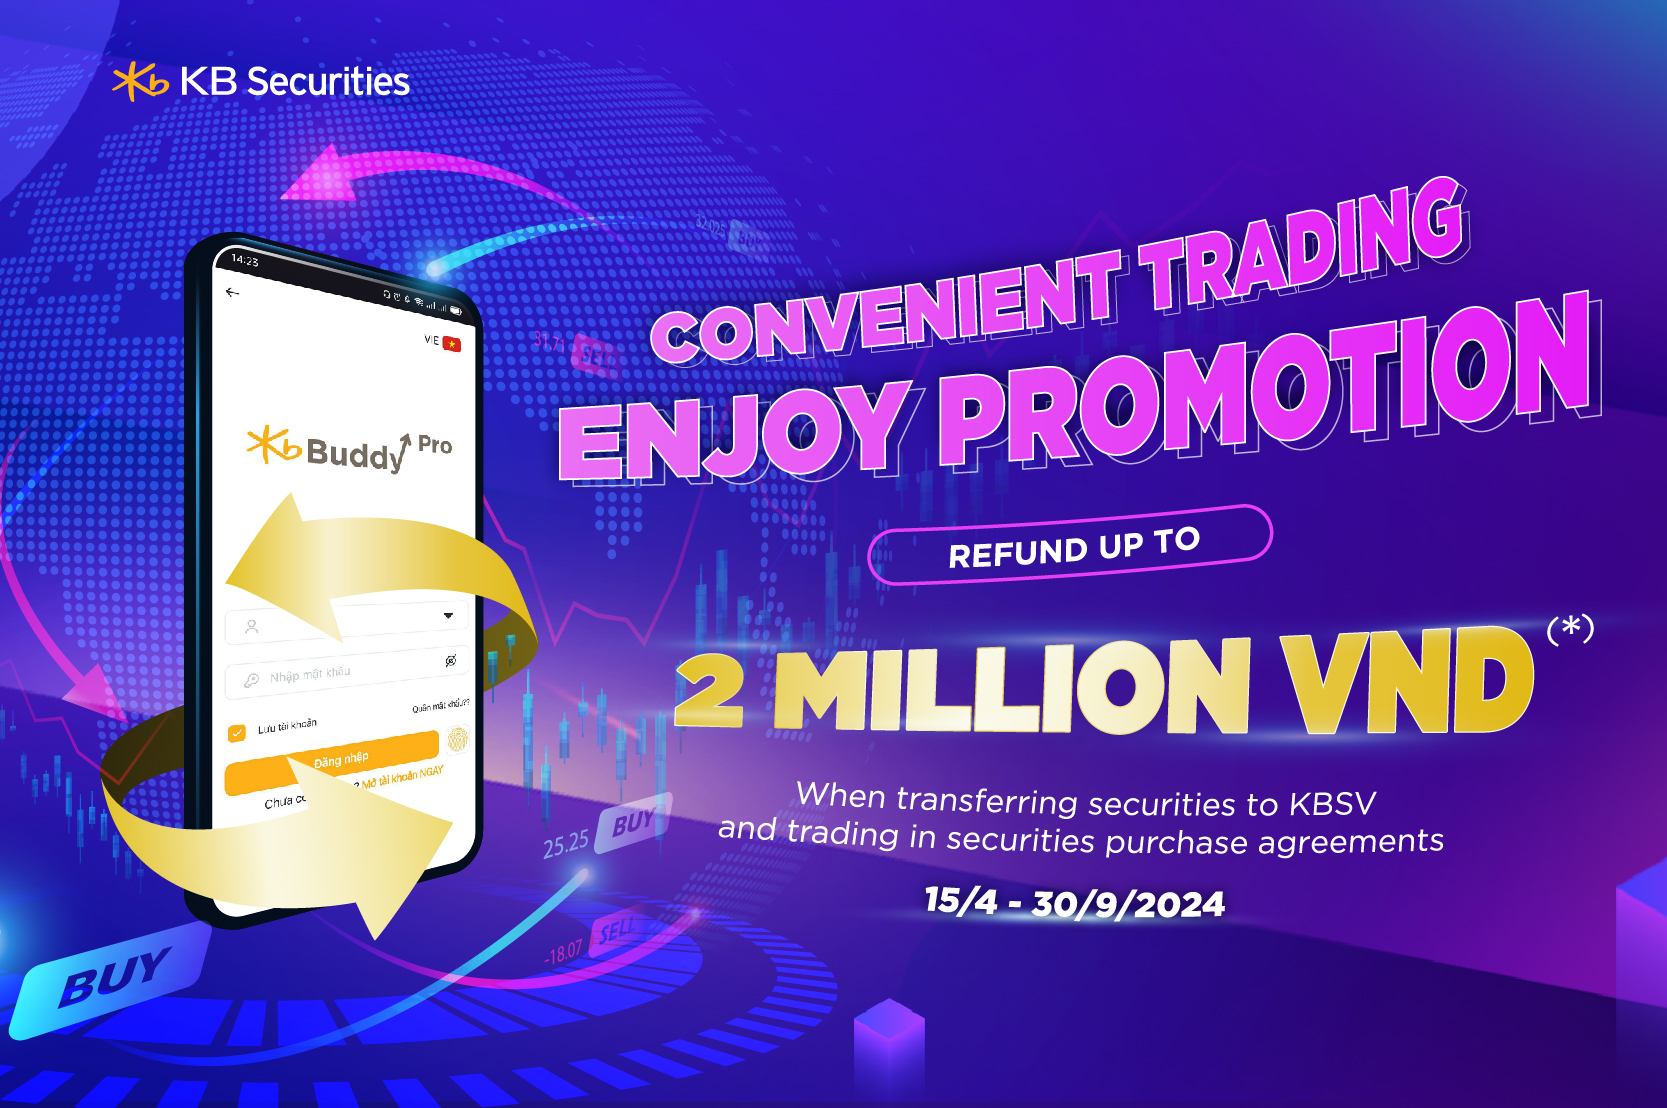 Convenient trading – Enjoy promotion